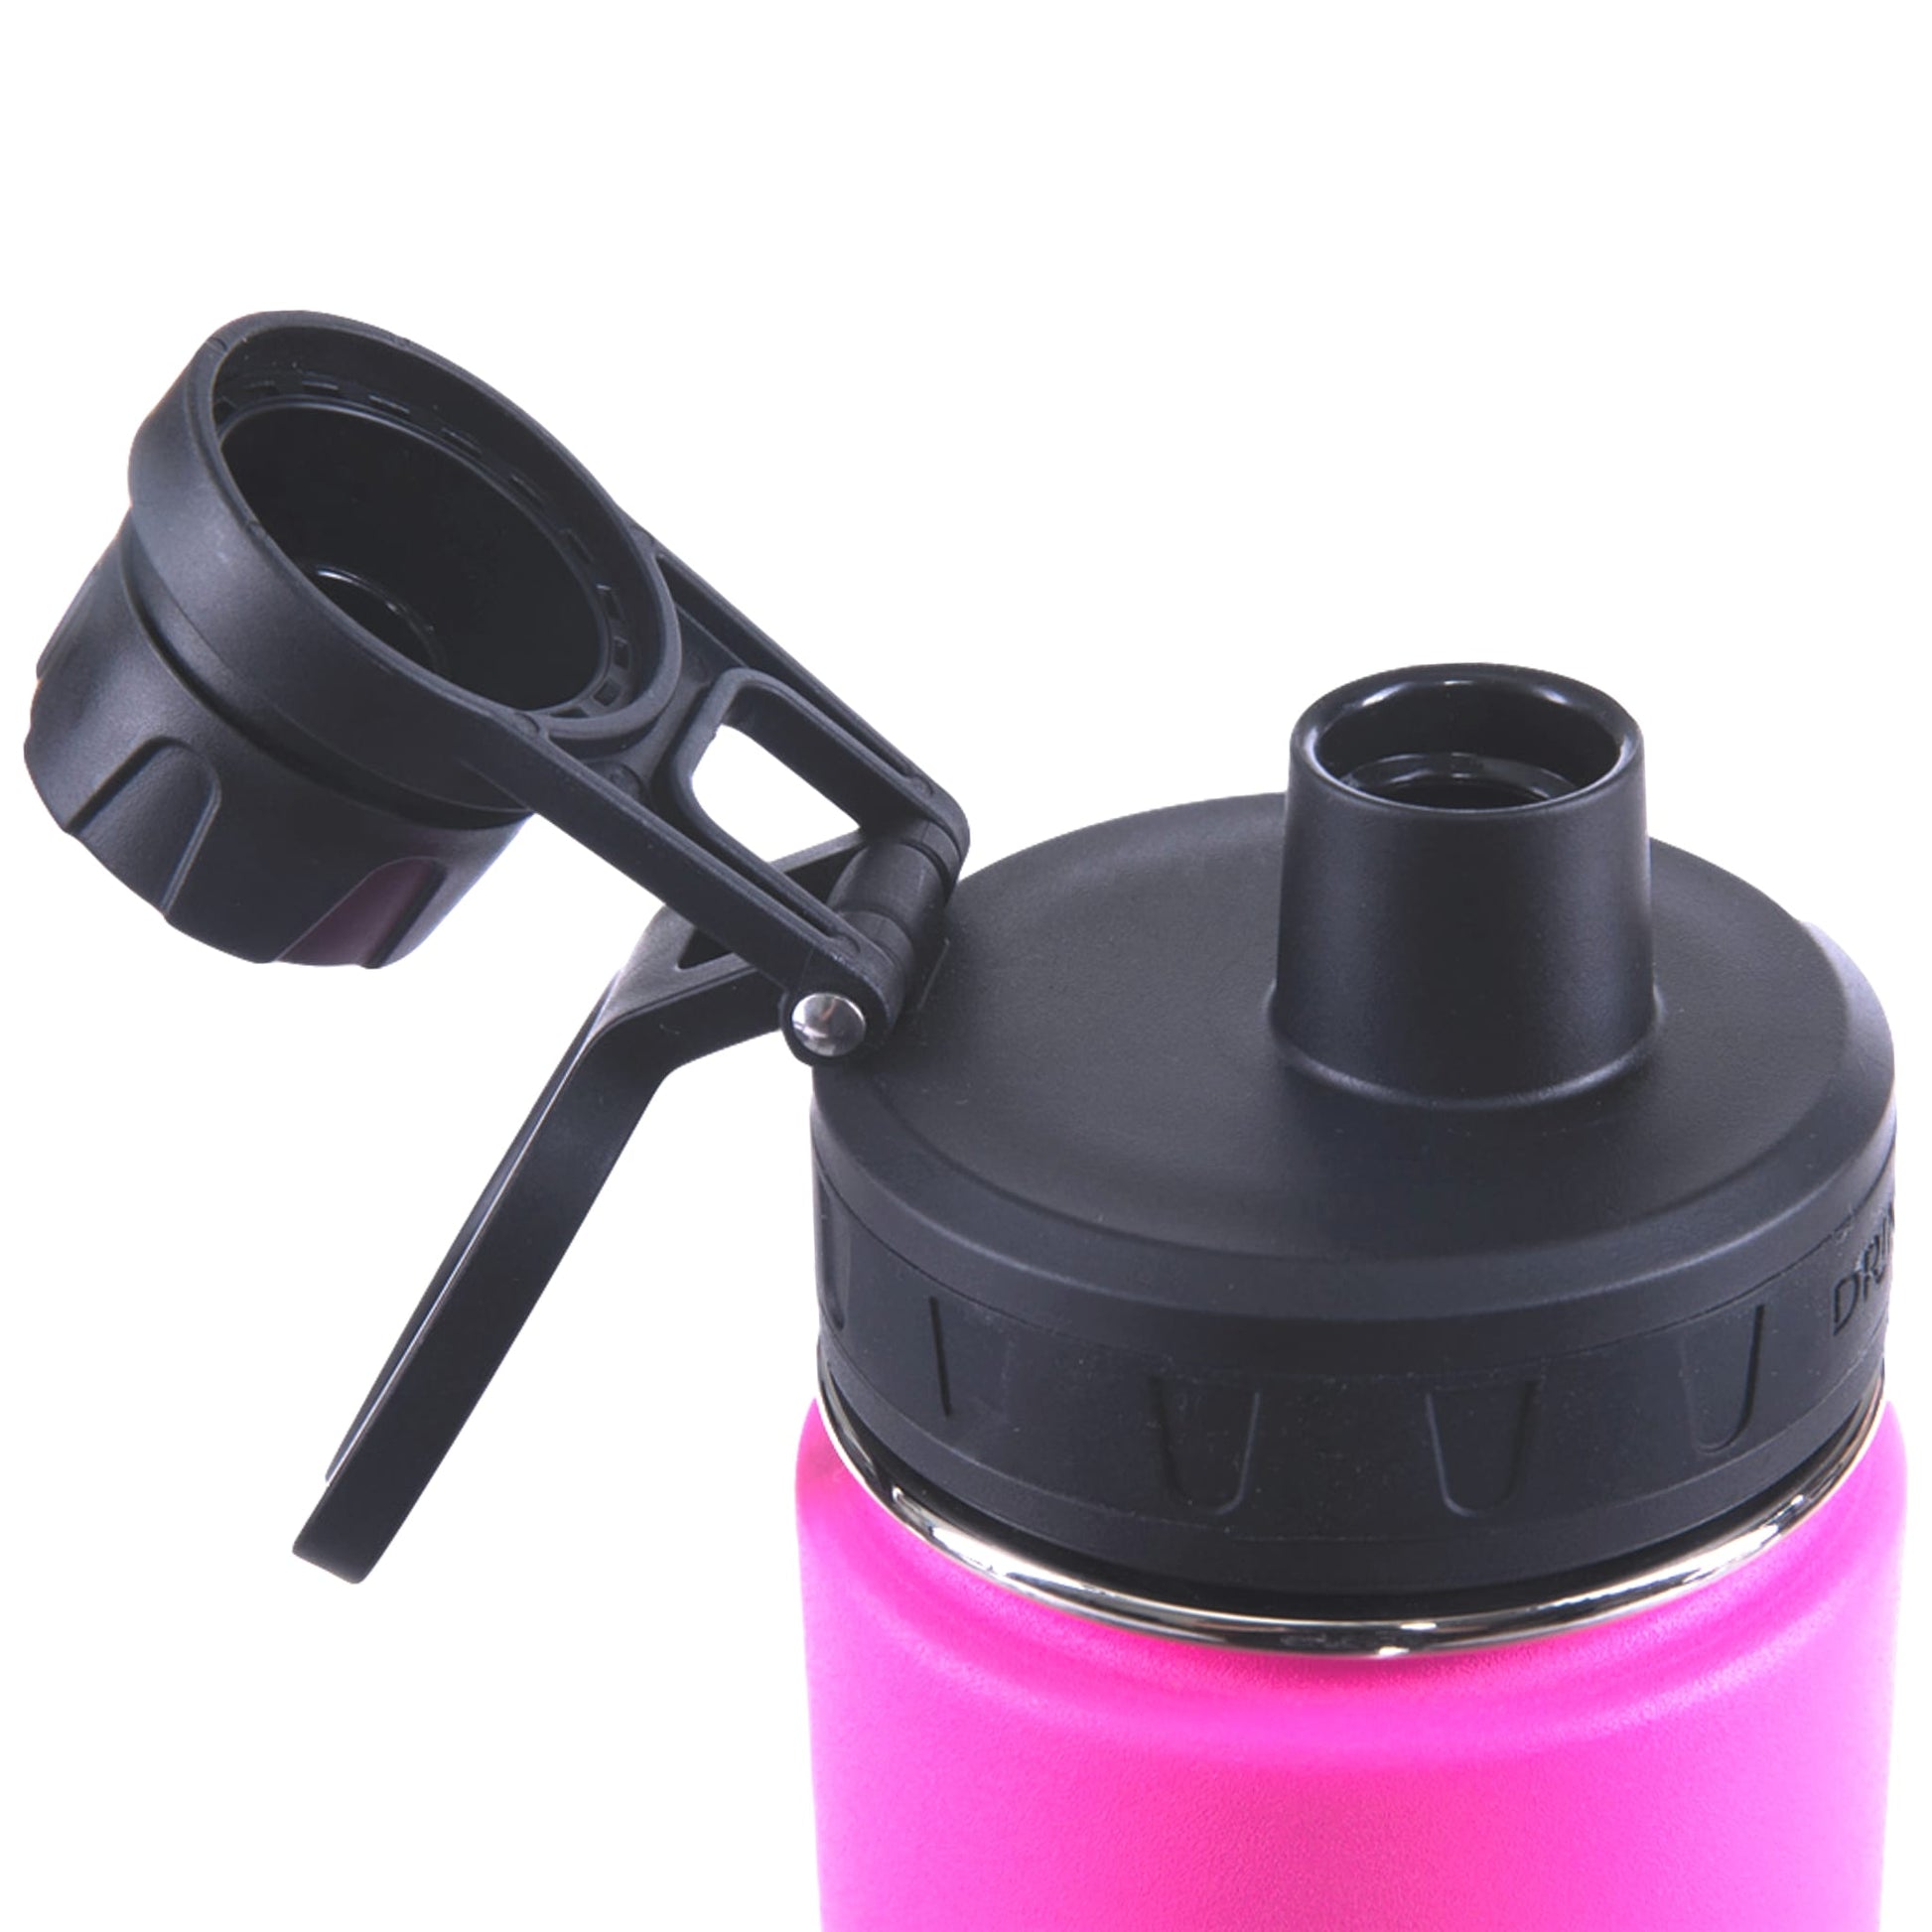 Stainless Steel Sport Water Bottle - Island Pink